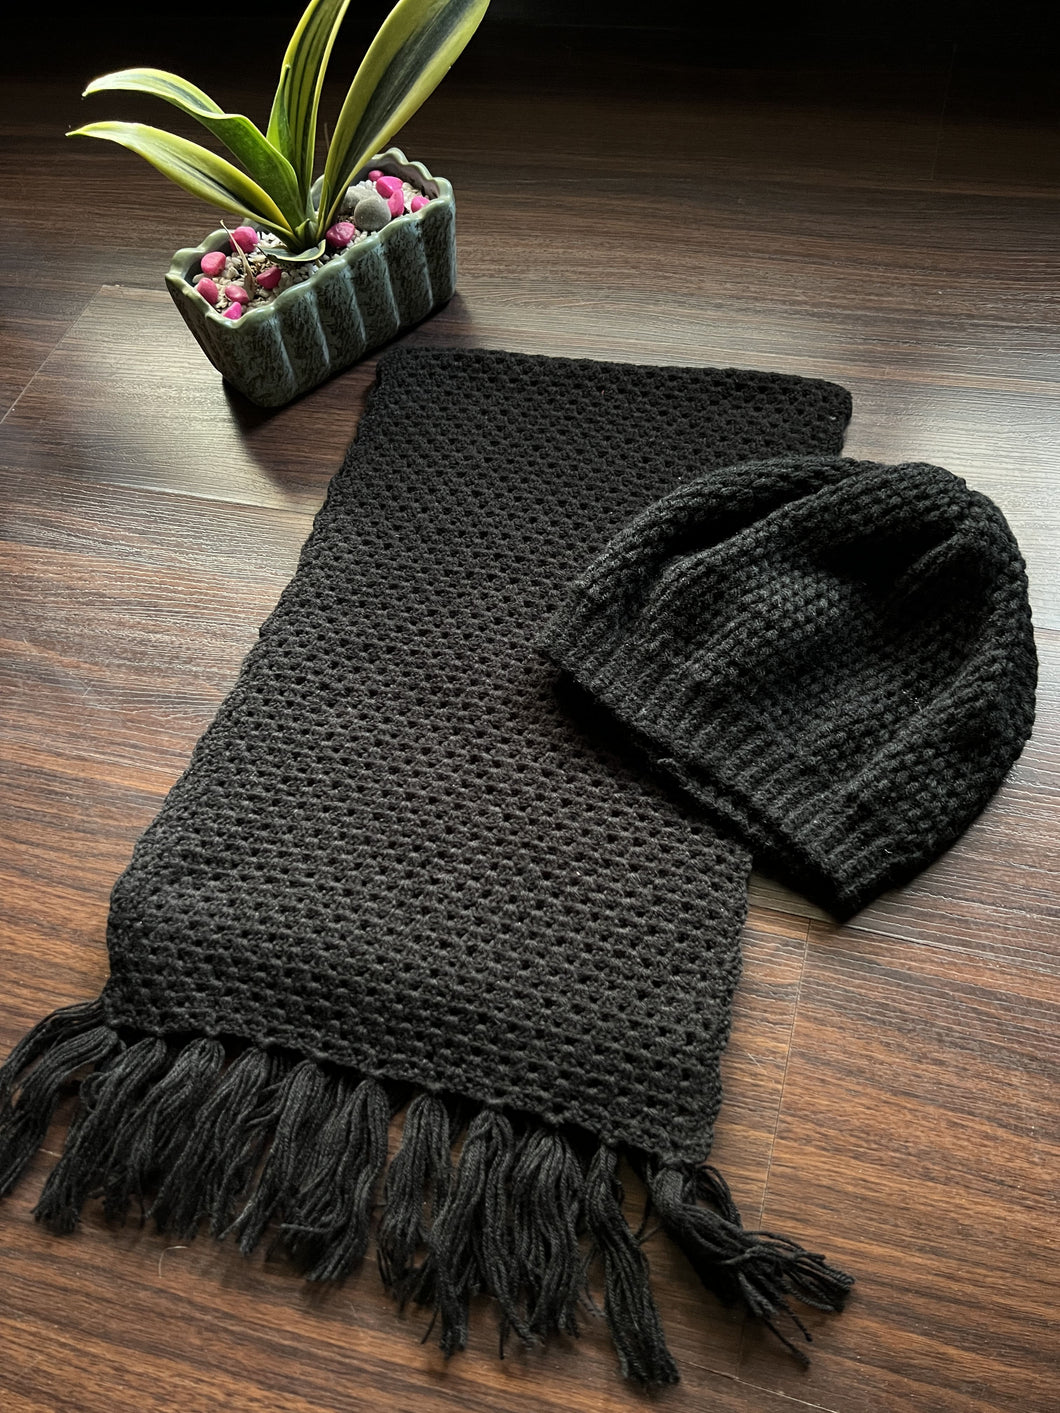 Sooti Black Scarf & Beanie crochet love made by a granny